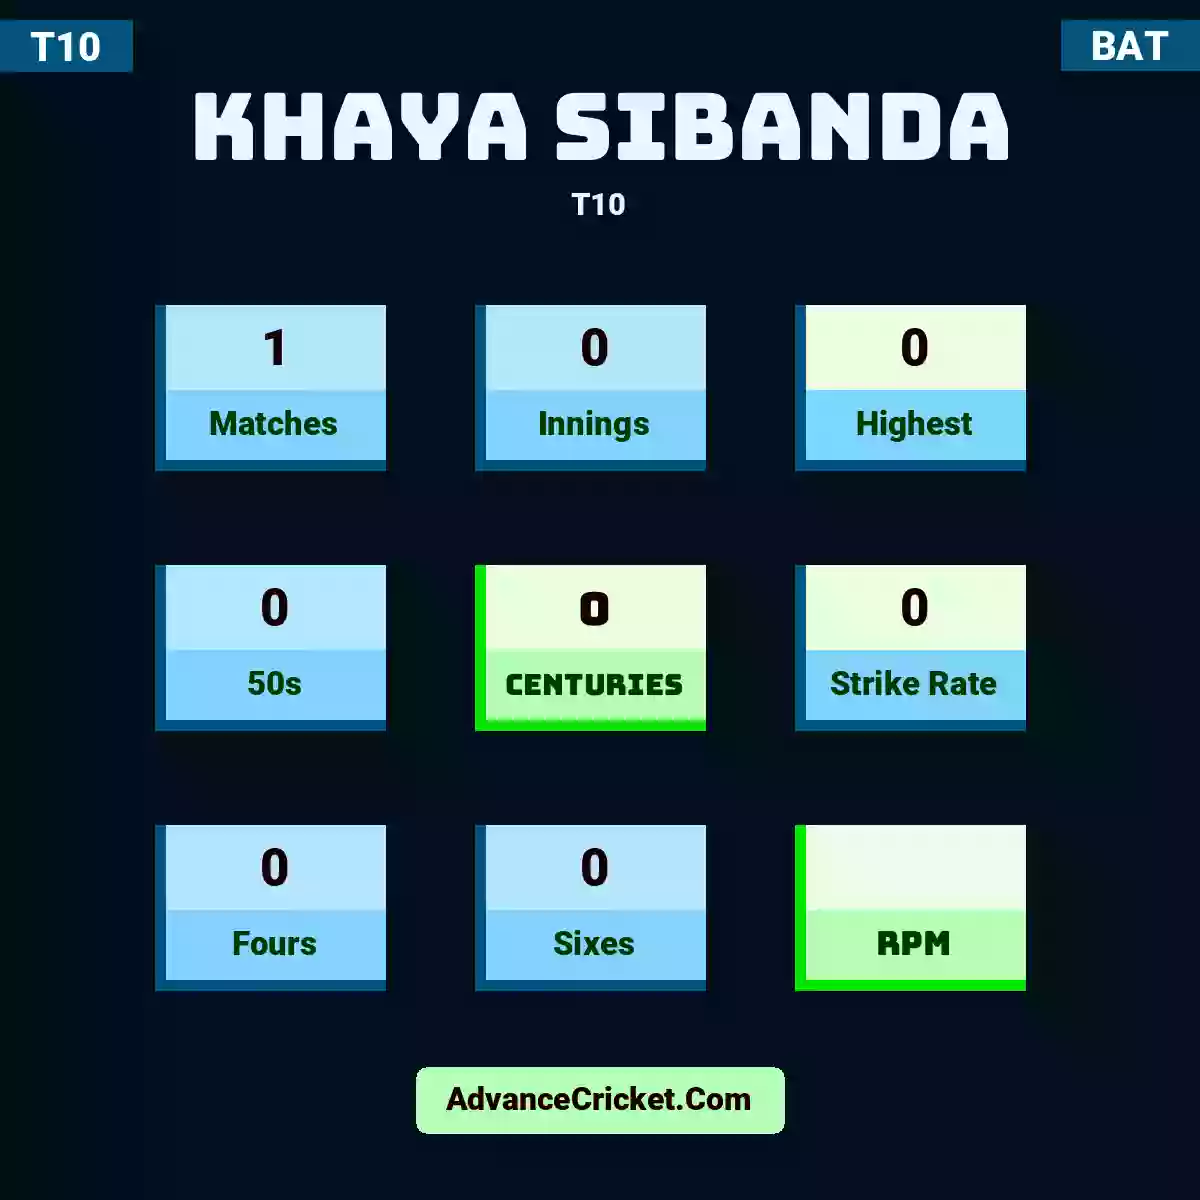 Khaya Sibanda T10 , Khaya Sibanda played 1 matches, scored 0 runs as highest, 0 half-centuries, and 0 centuries, with a strike rate of 0. Khaya.Sibanda hit 0 fours and 0 sixes.